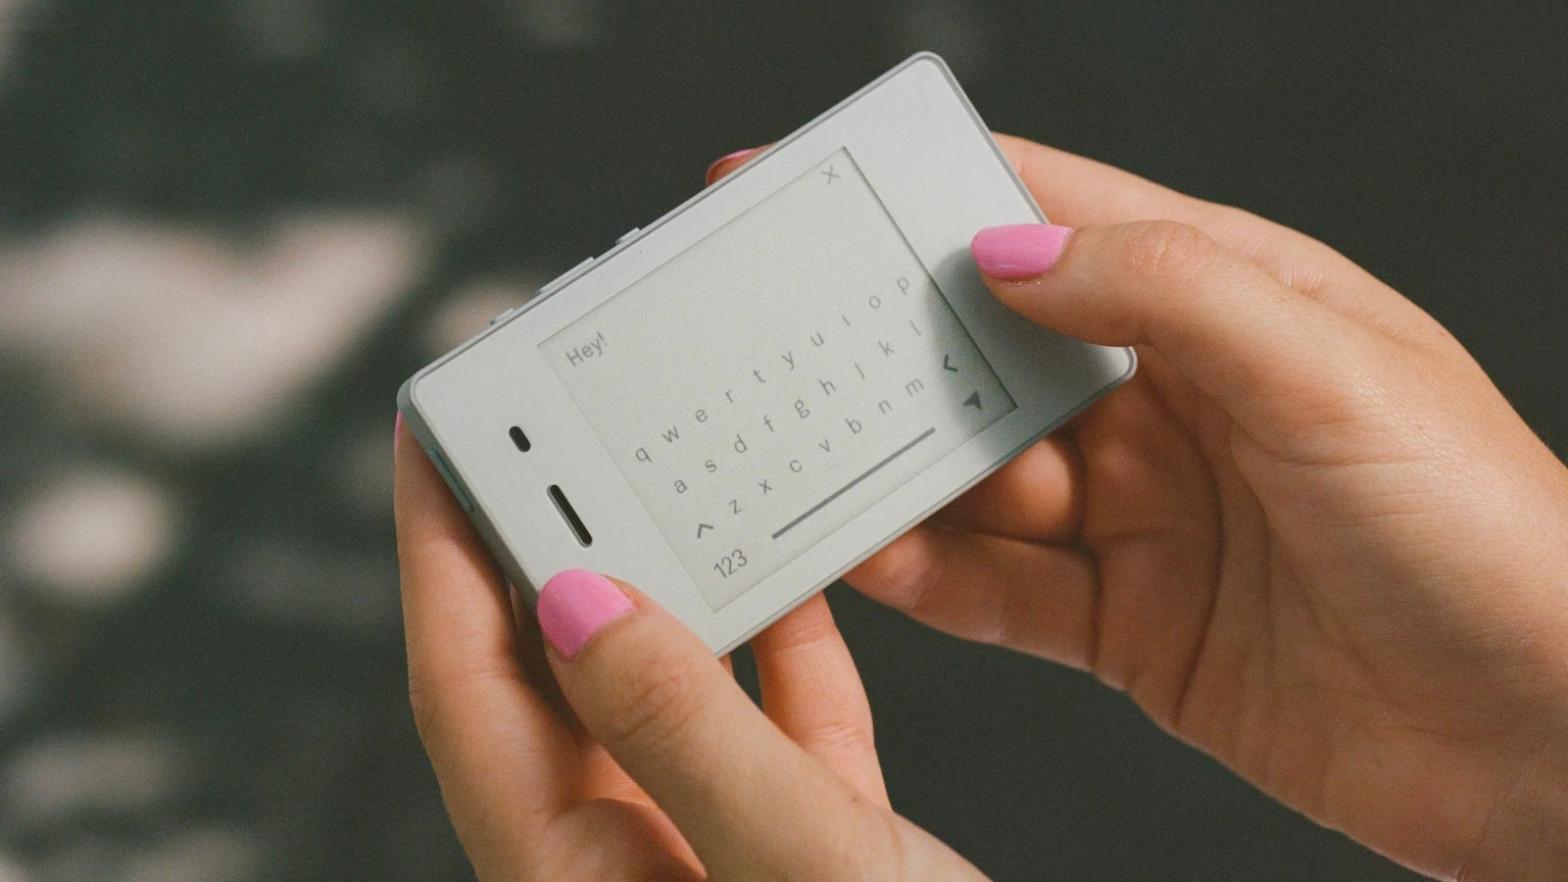 You can buy minimalist phones like the Light Phone II. (Photo: Light Phone II)